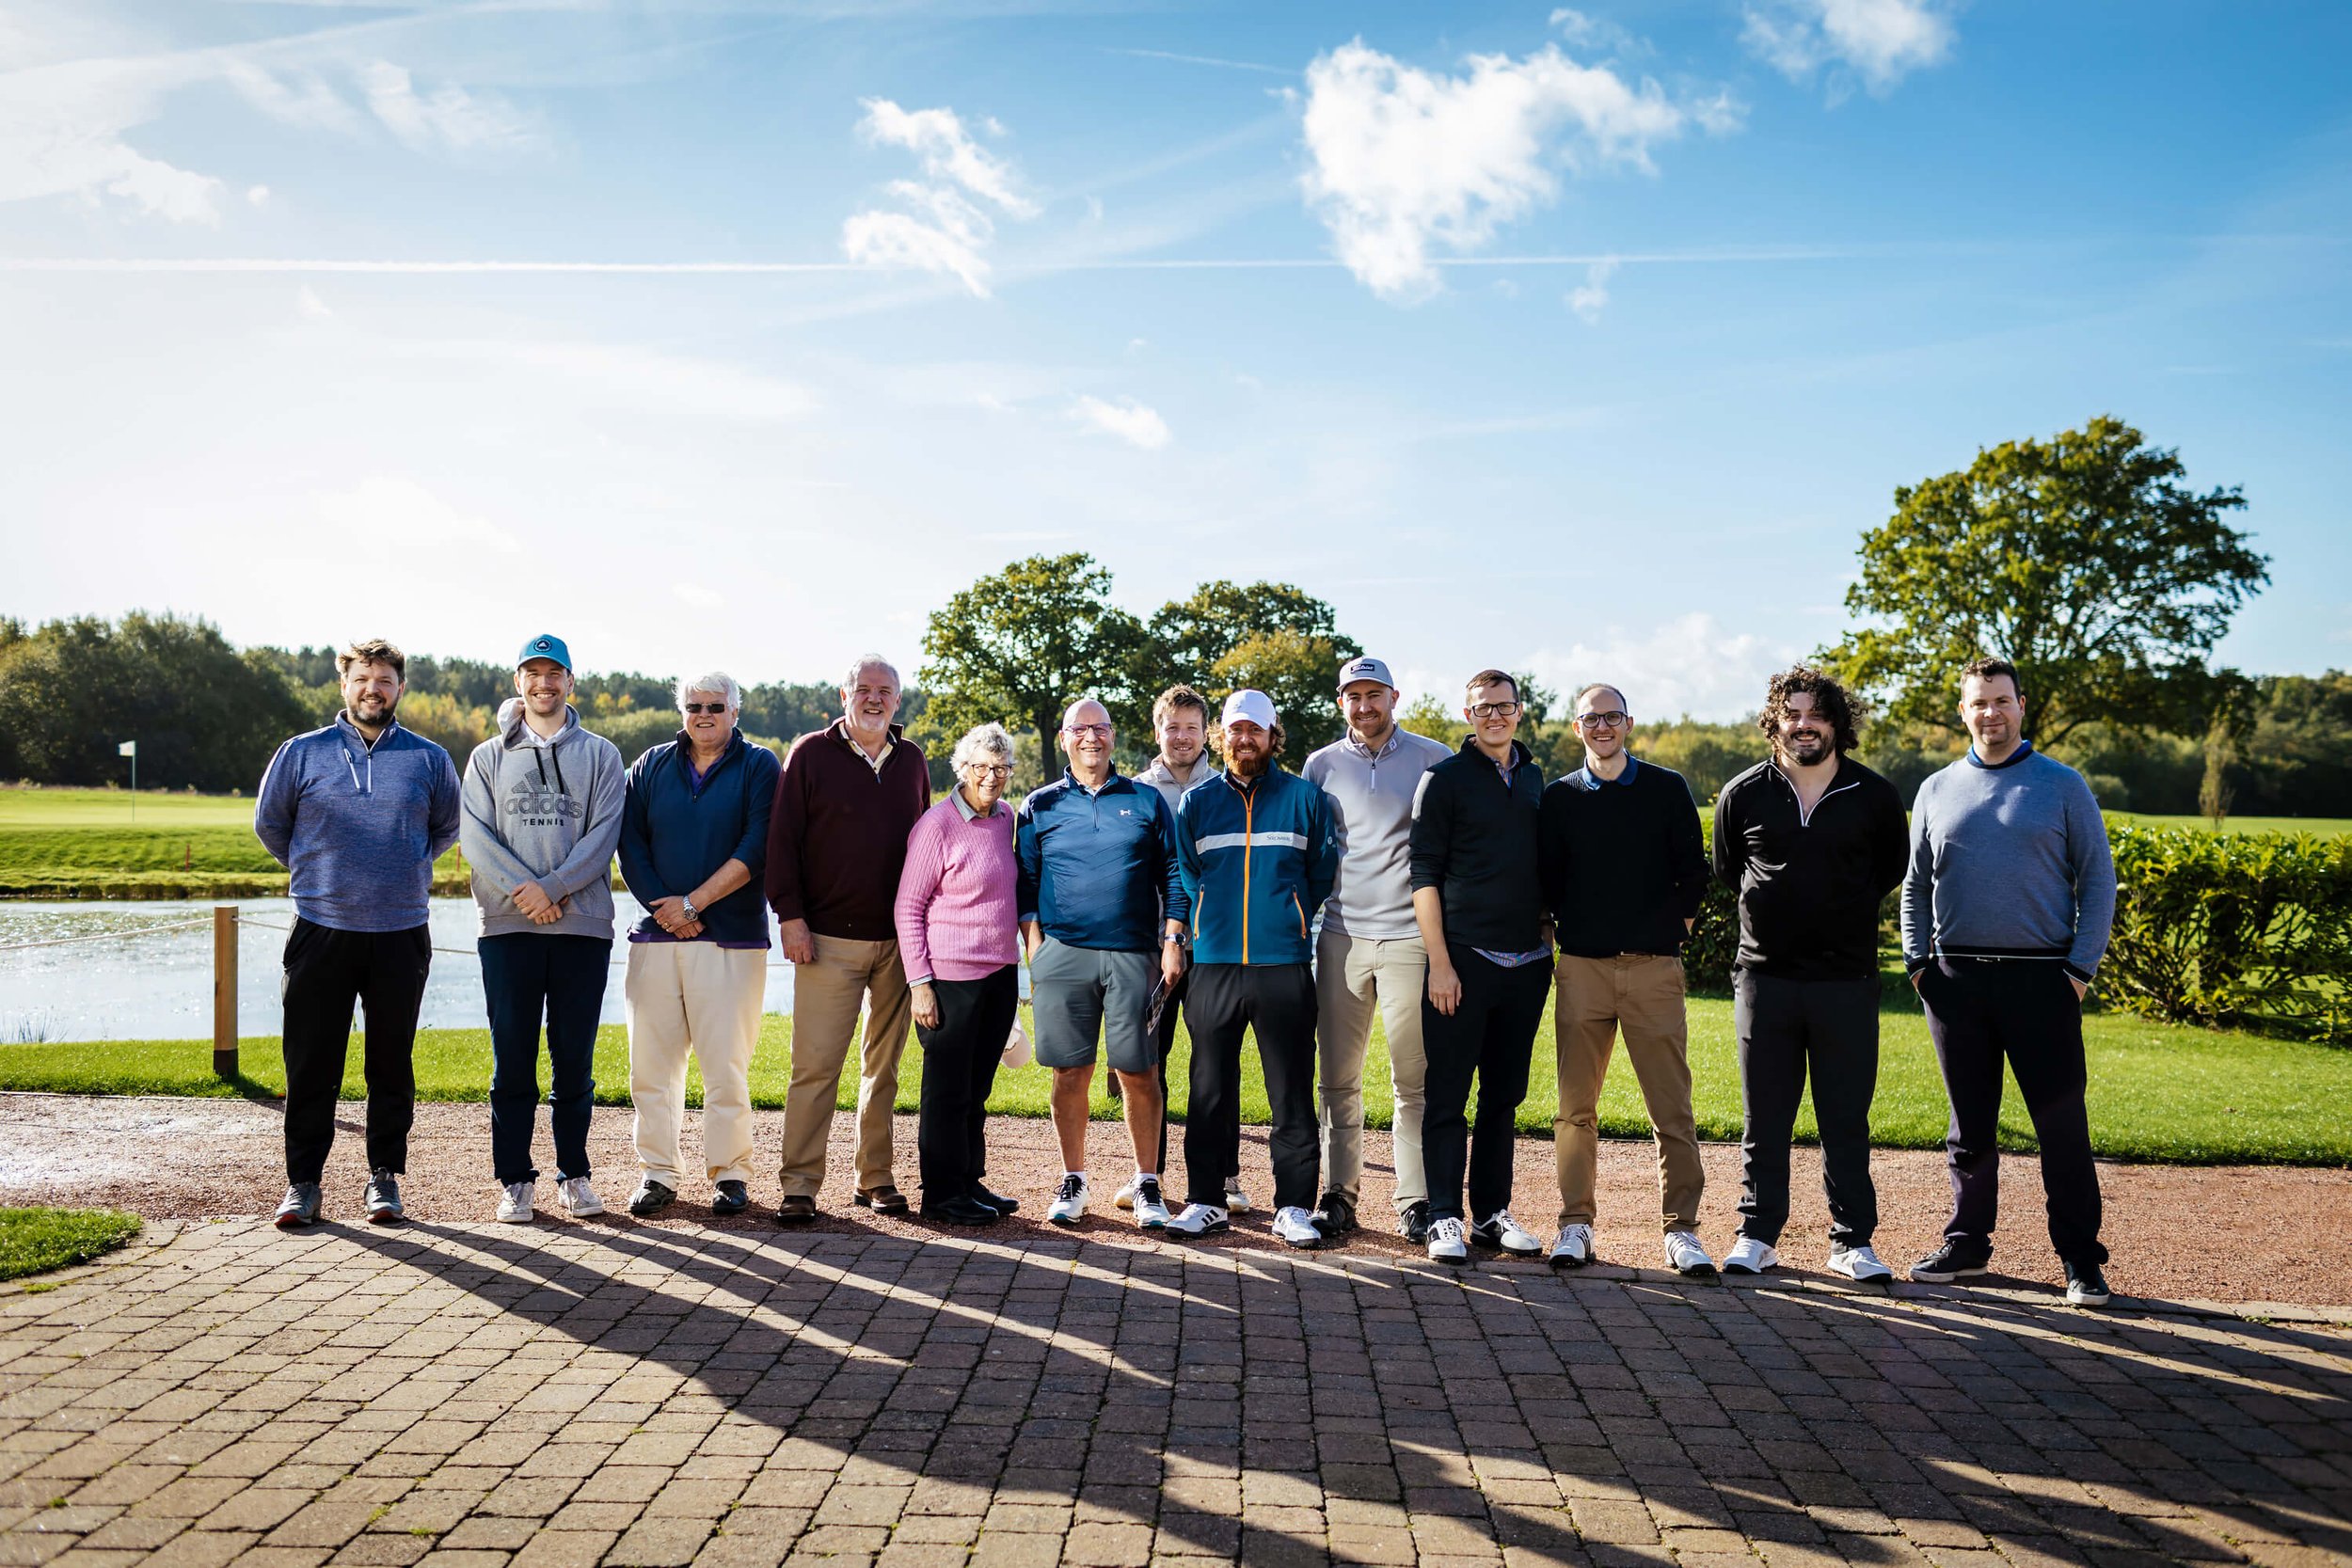 Group photo of the golfers at Sandburn Hall